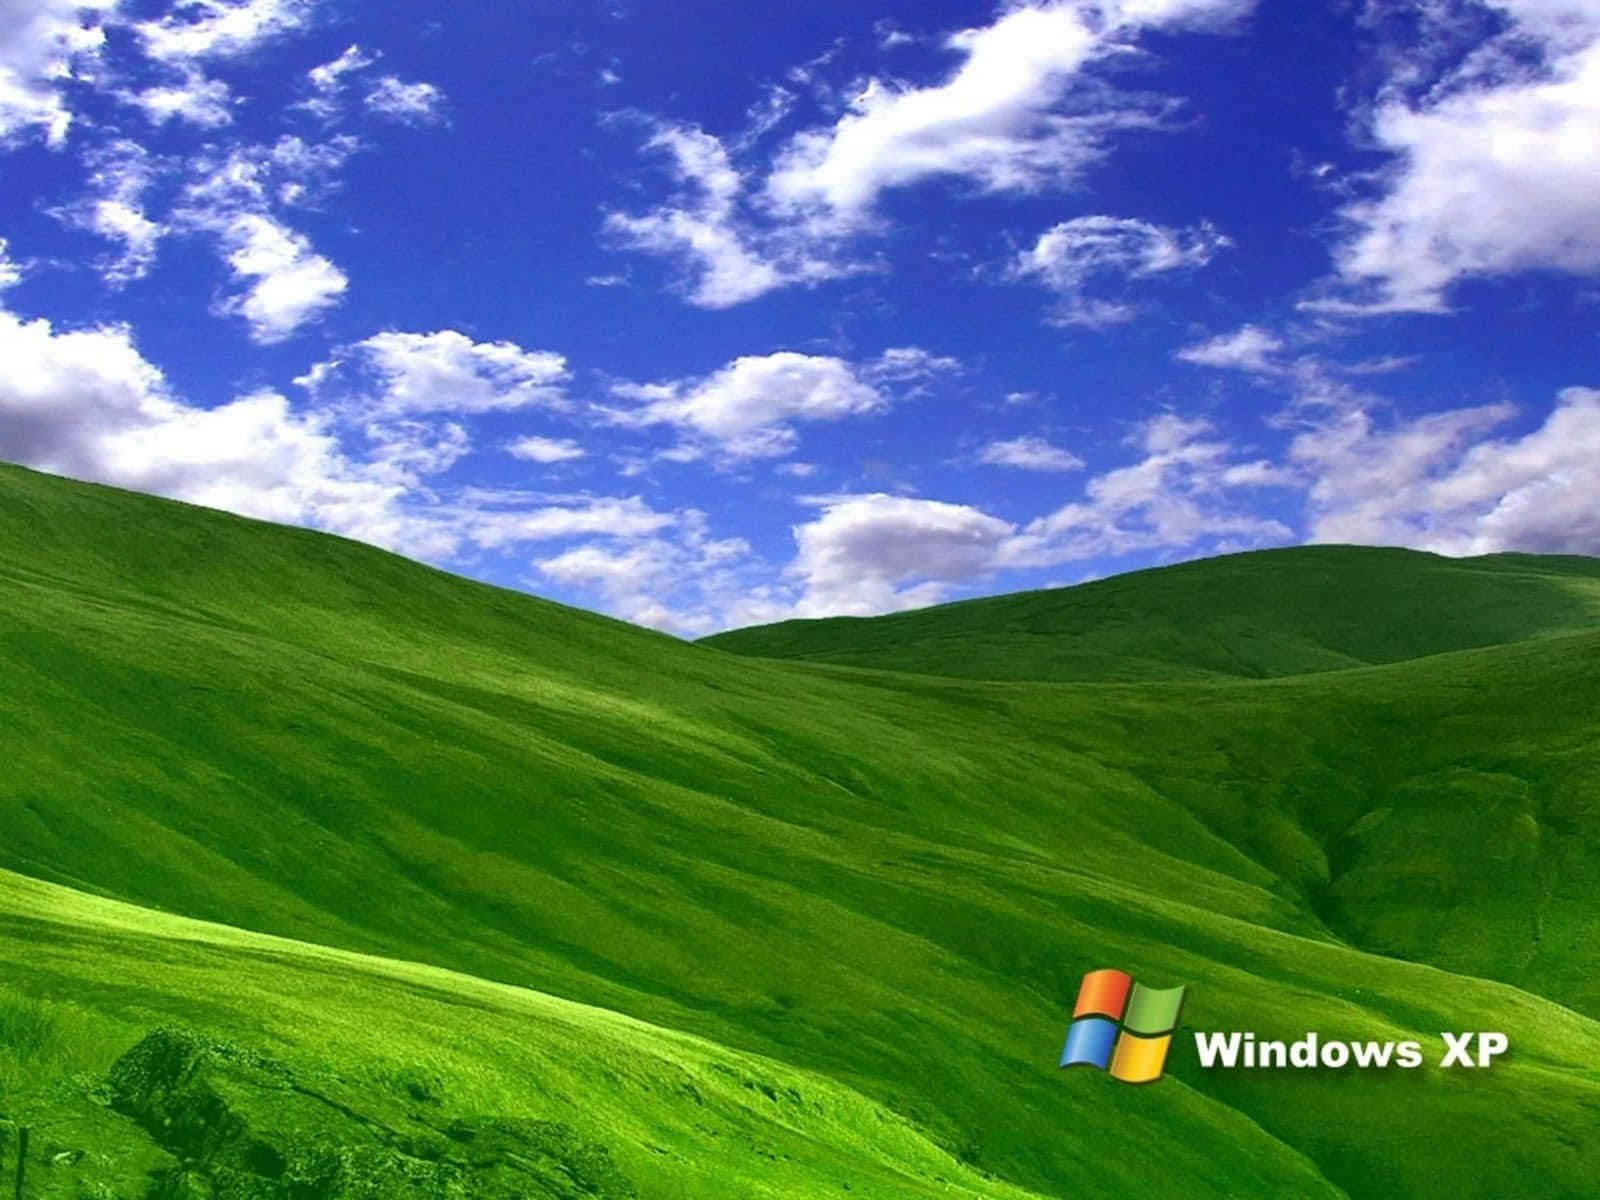 100+] Windows Xp Pictures 